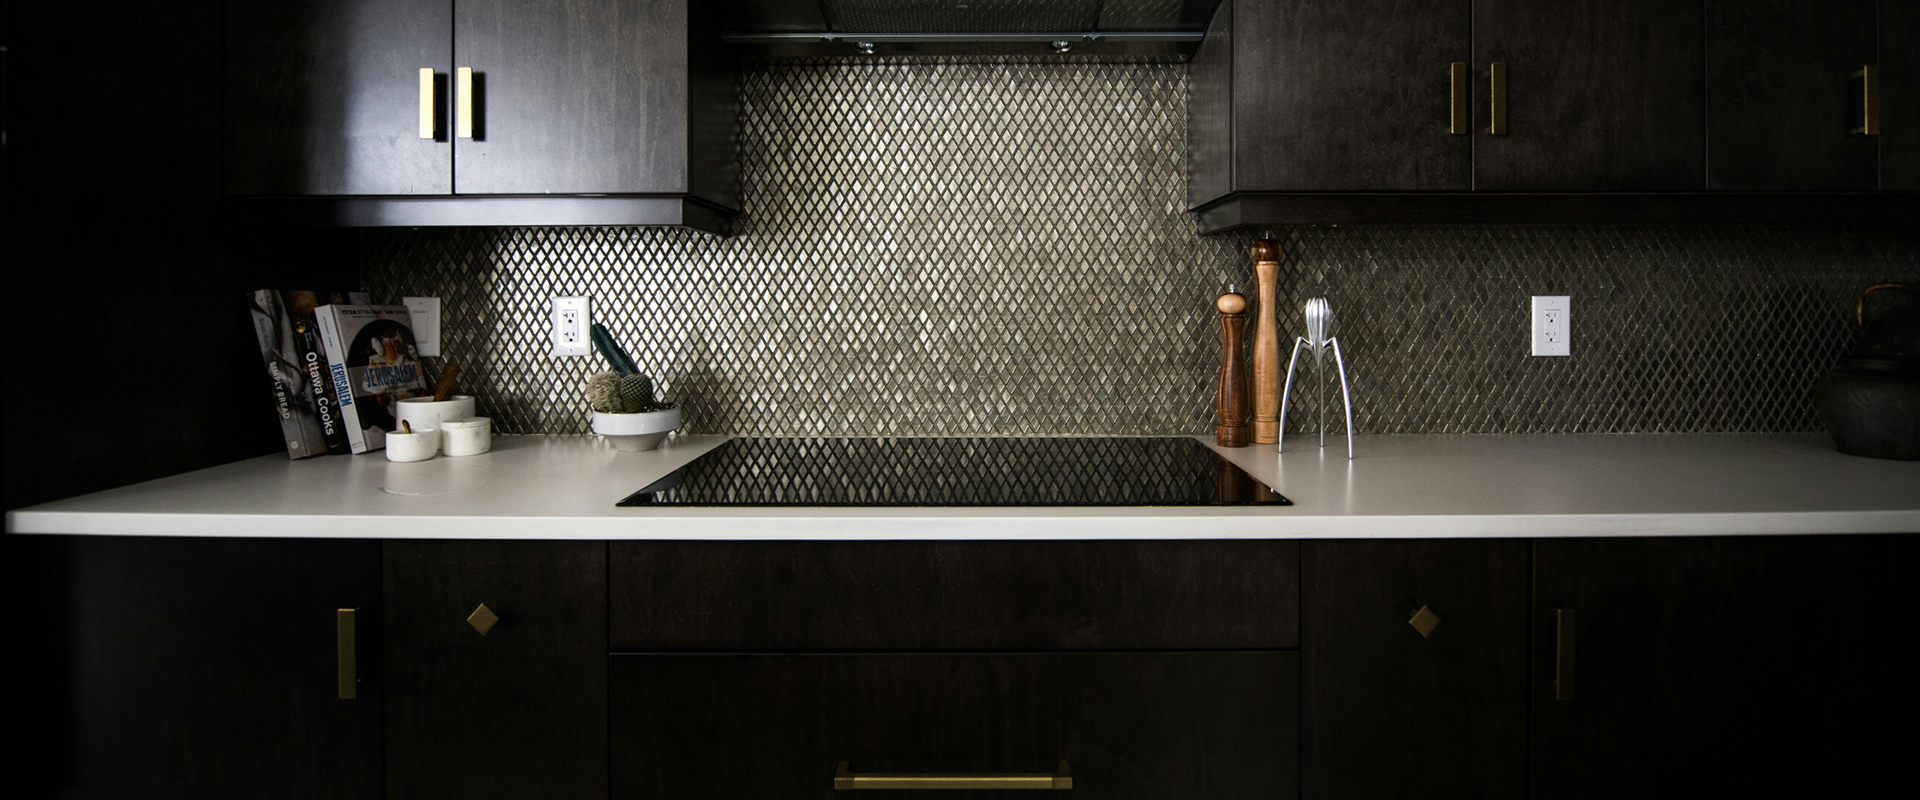 kitchen countertop tiles